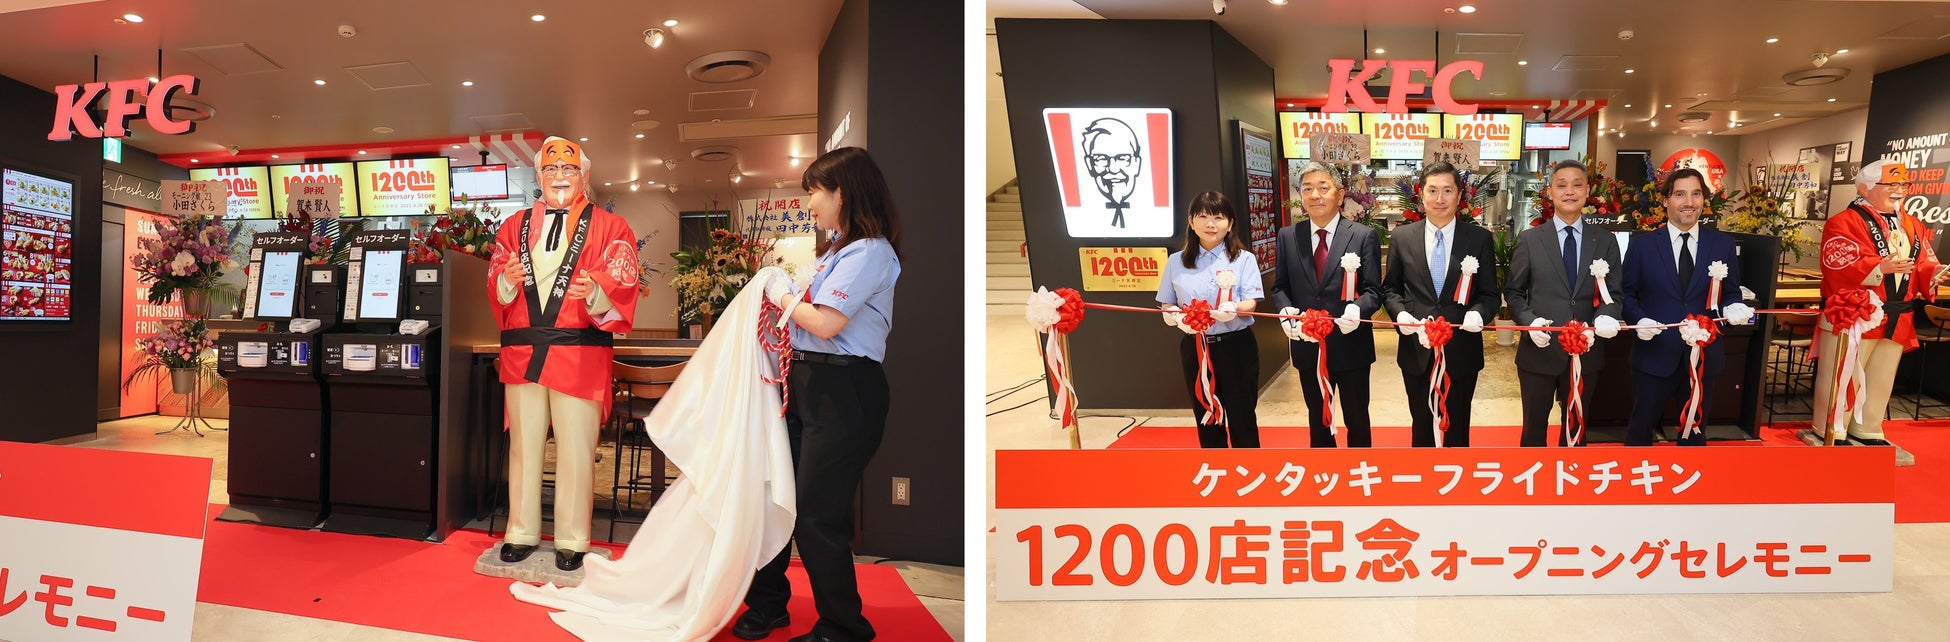 KFC1200店舗目の誕生を記念したオープニングイベントをミーナ天神にて開催「ケンタッキーフライドチキン1200店記念オープニングセレモニー」